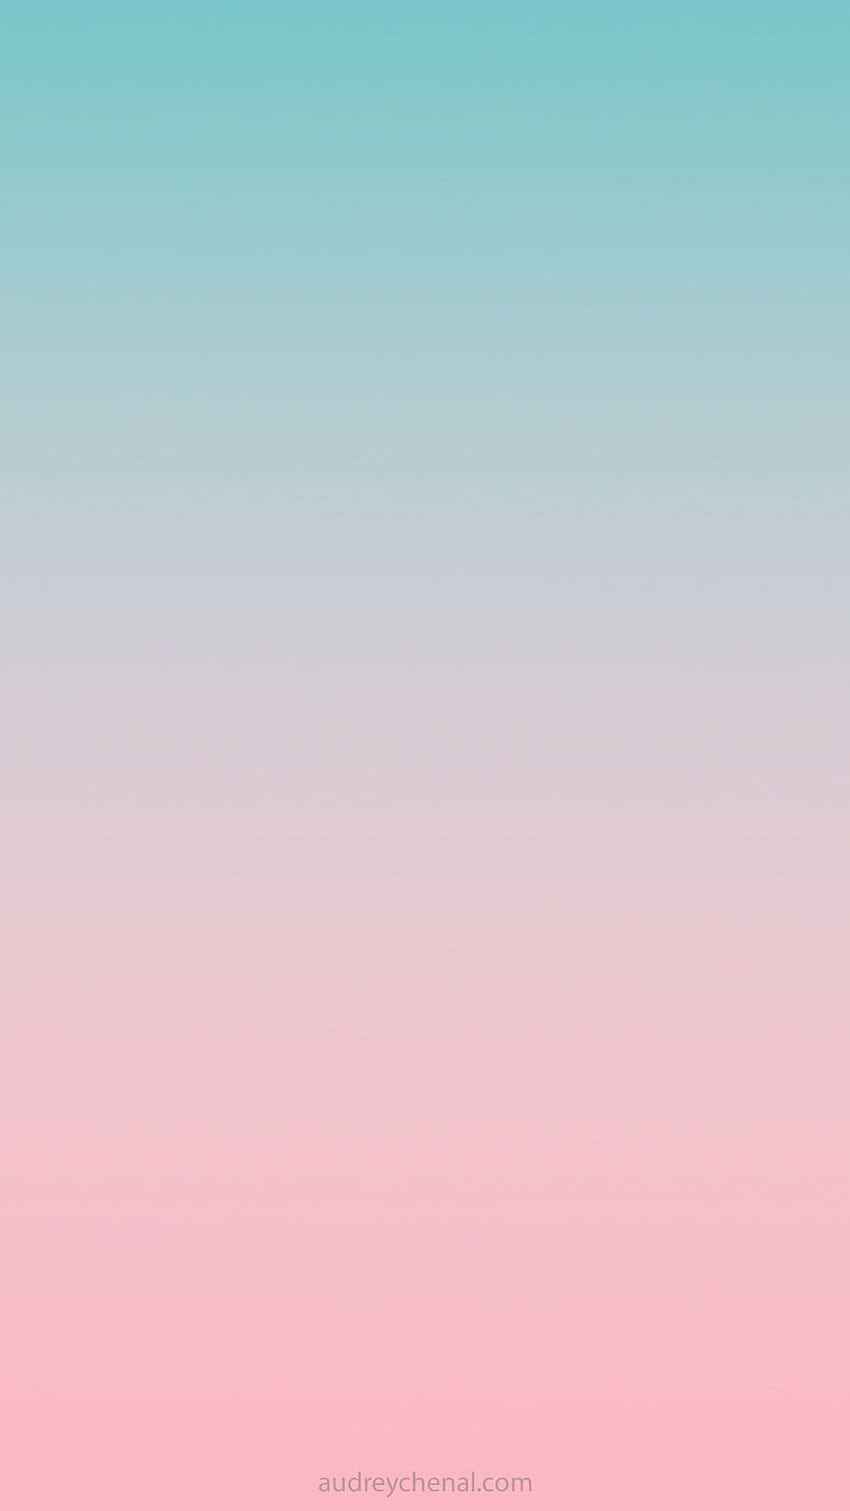 Chia sẻ 99 aesthetic pink background hình nền story instagram hay nhất   caodangtamdiepeduvn